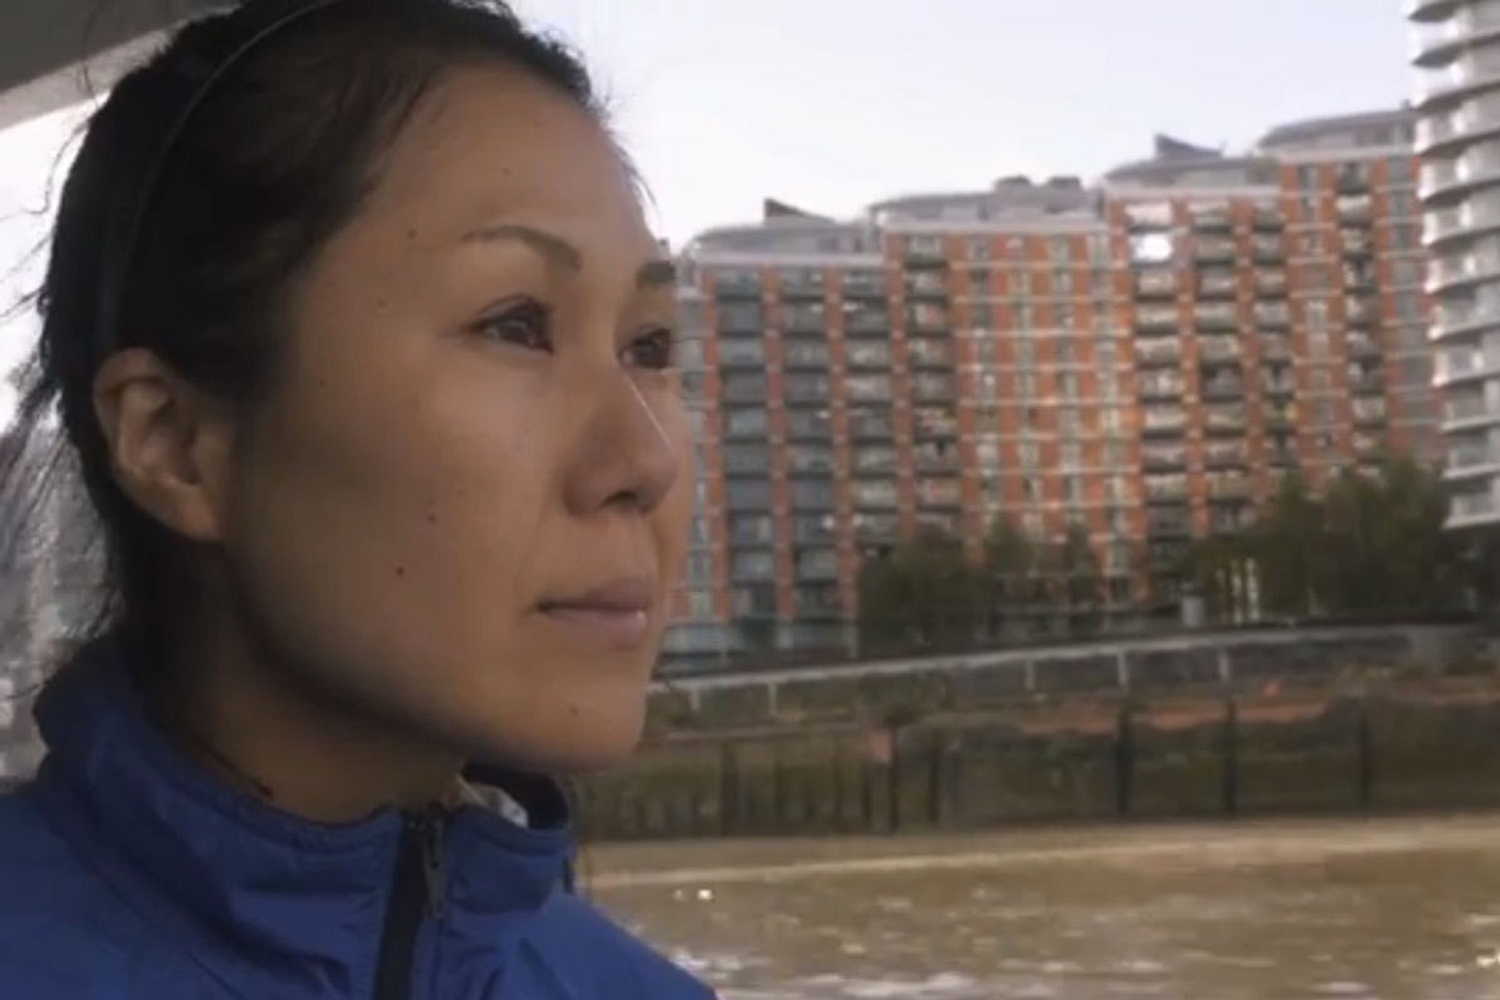 Deerhoof admire the Thames in new ‘Black Pitch’ video